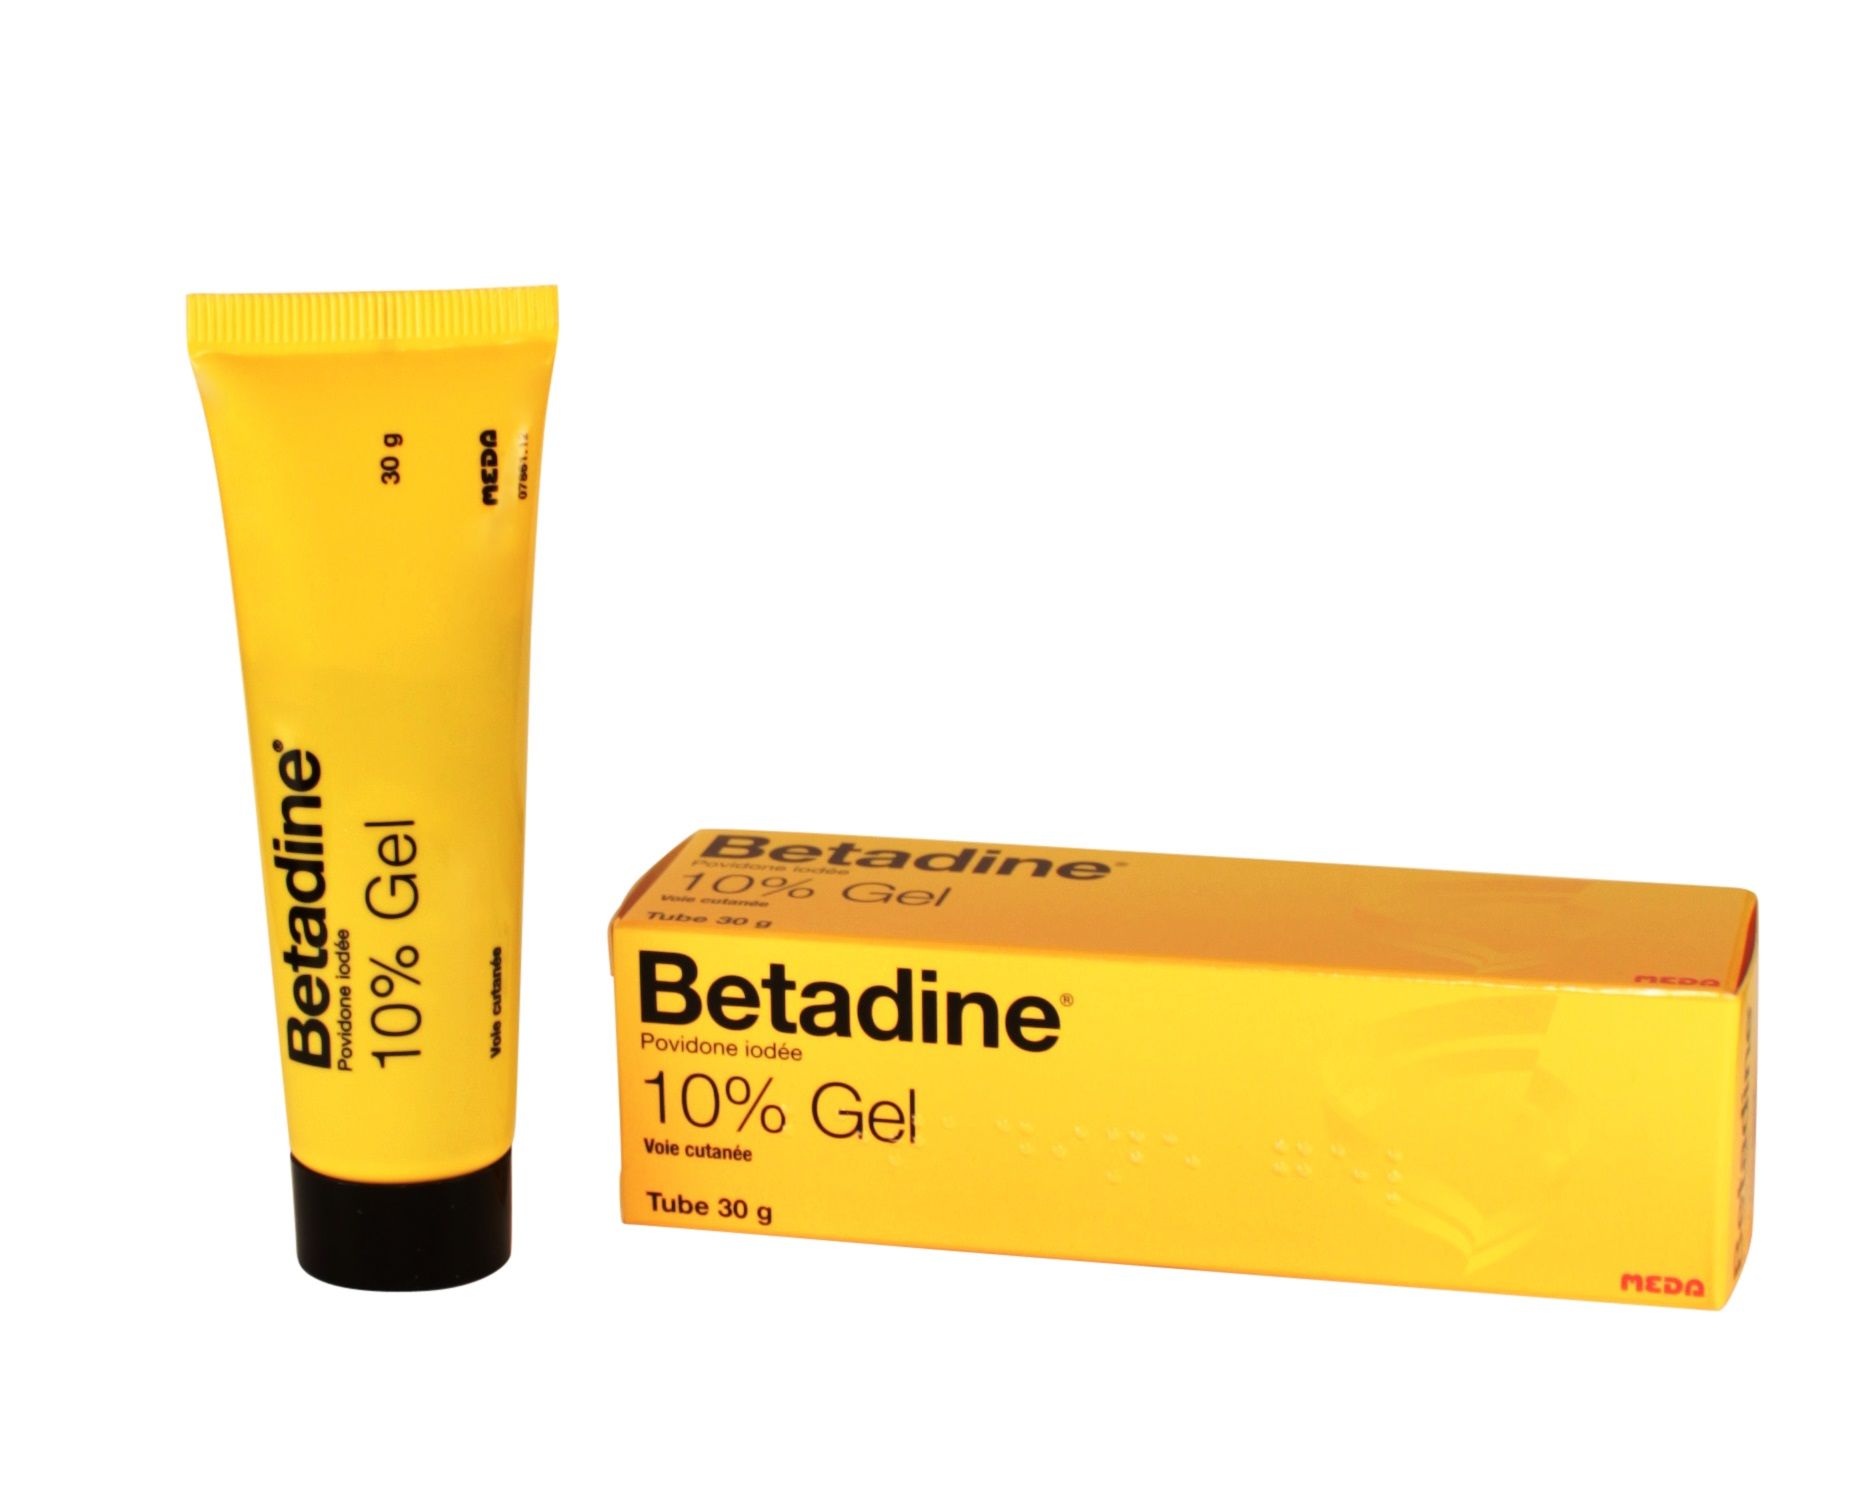 La pharmacie rolland : Betadine 10% gel